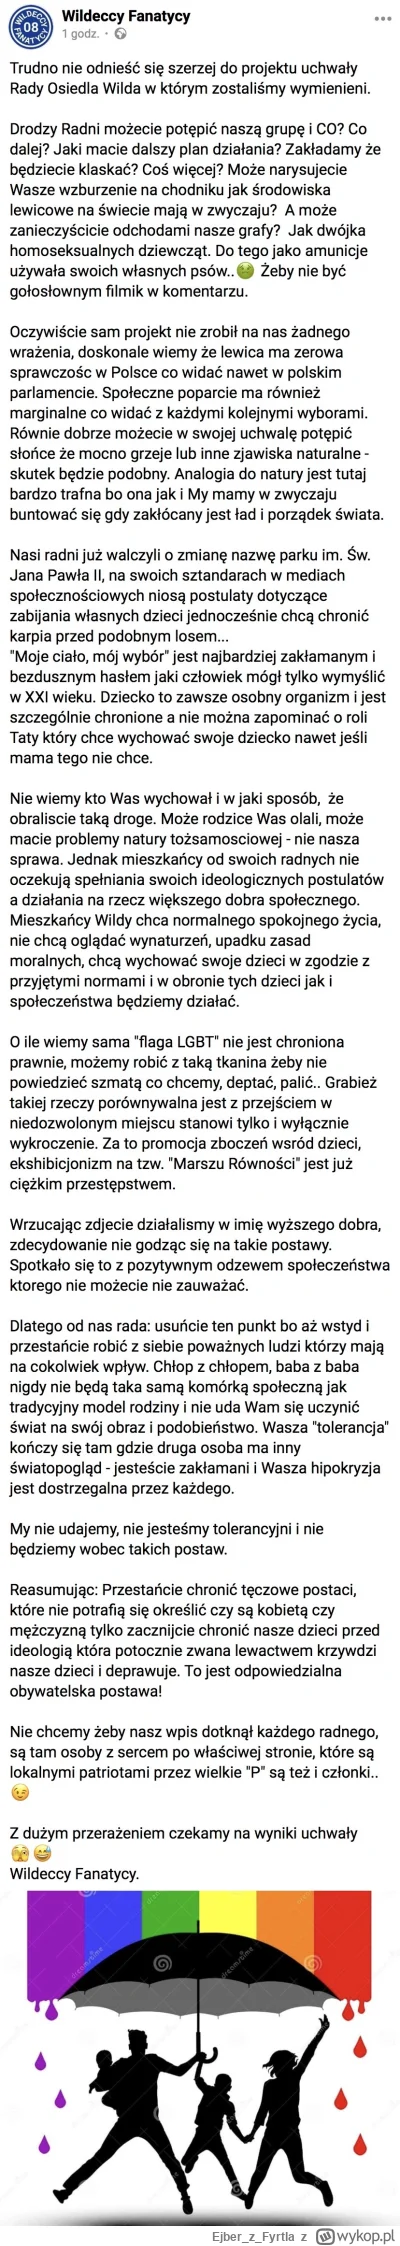 EjberzFyrtla - #mirkohooligans #poznan